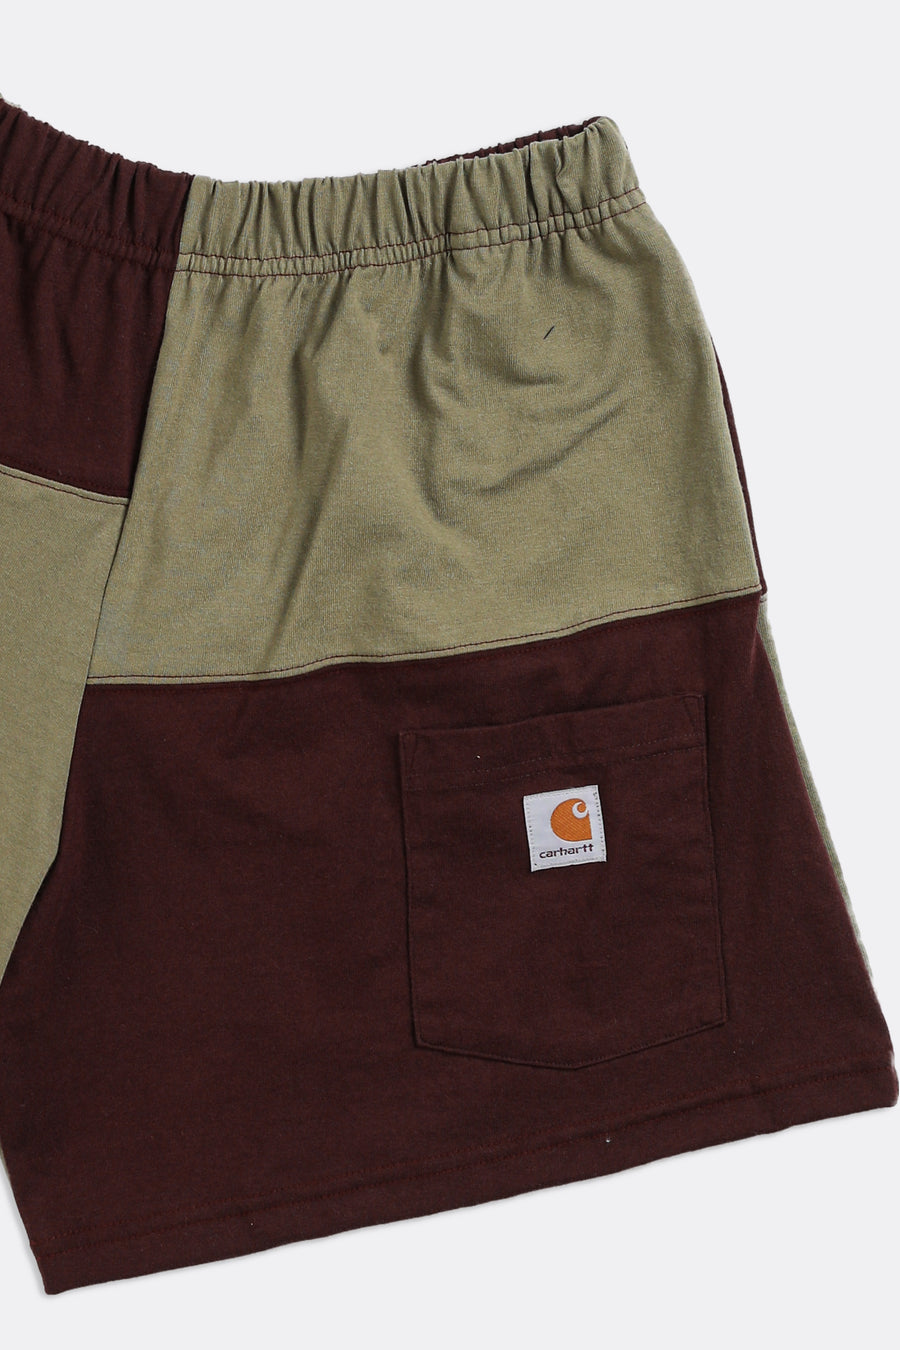 Unisex Rework Carhartt Patchwork Tee Shorts - S, L